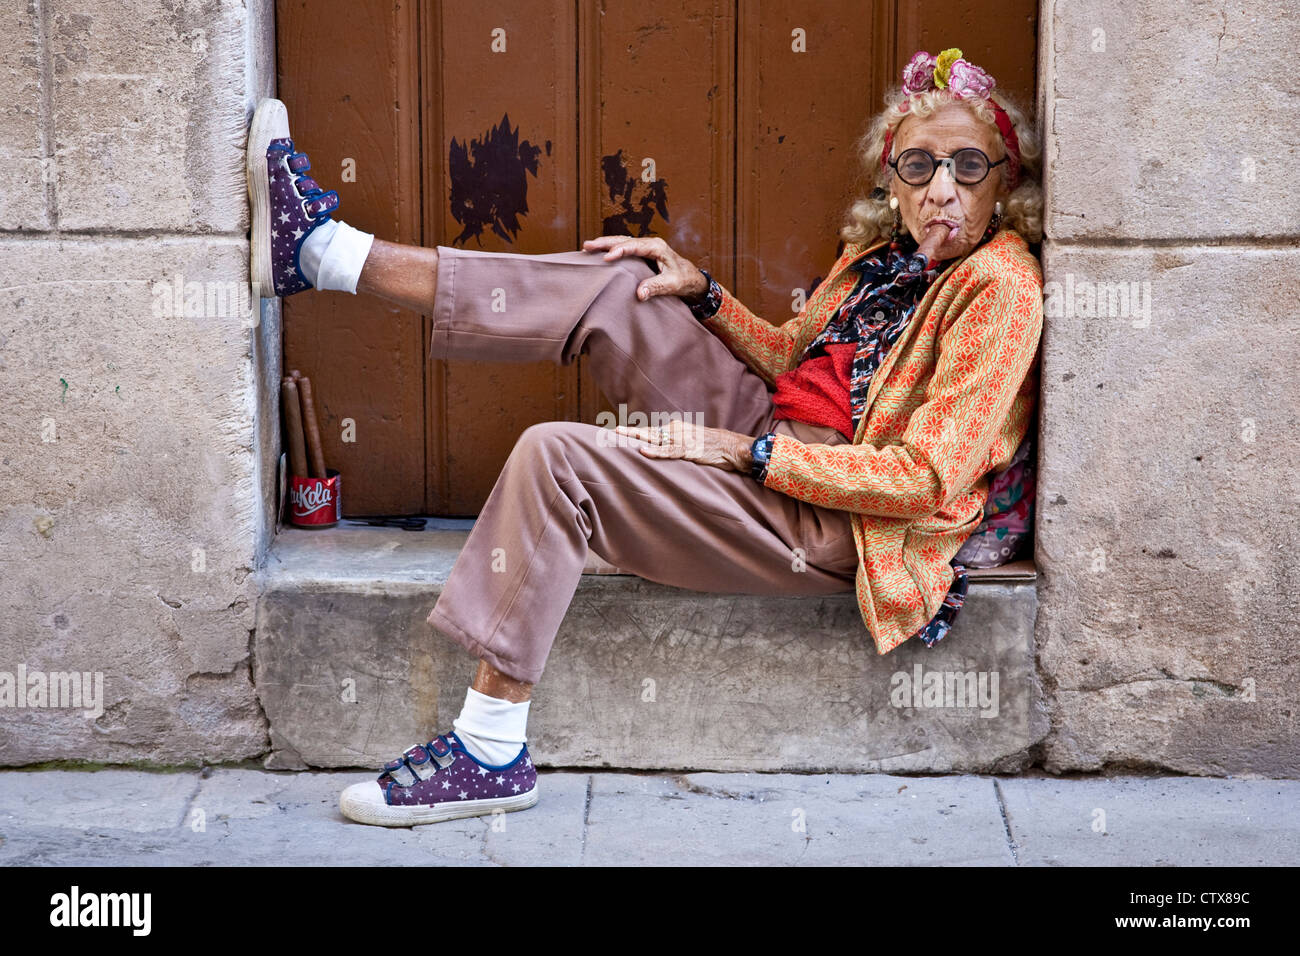 Old woman in a doorway smoking a Cigar, Havana, Cuba Stock Photo